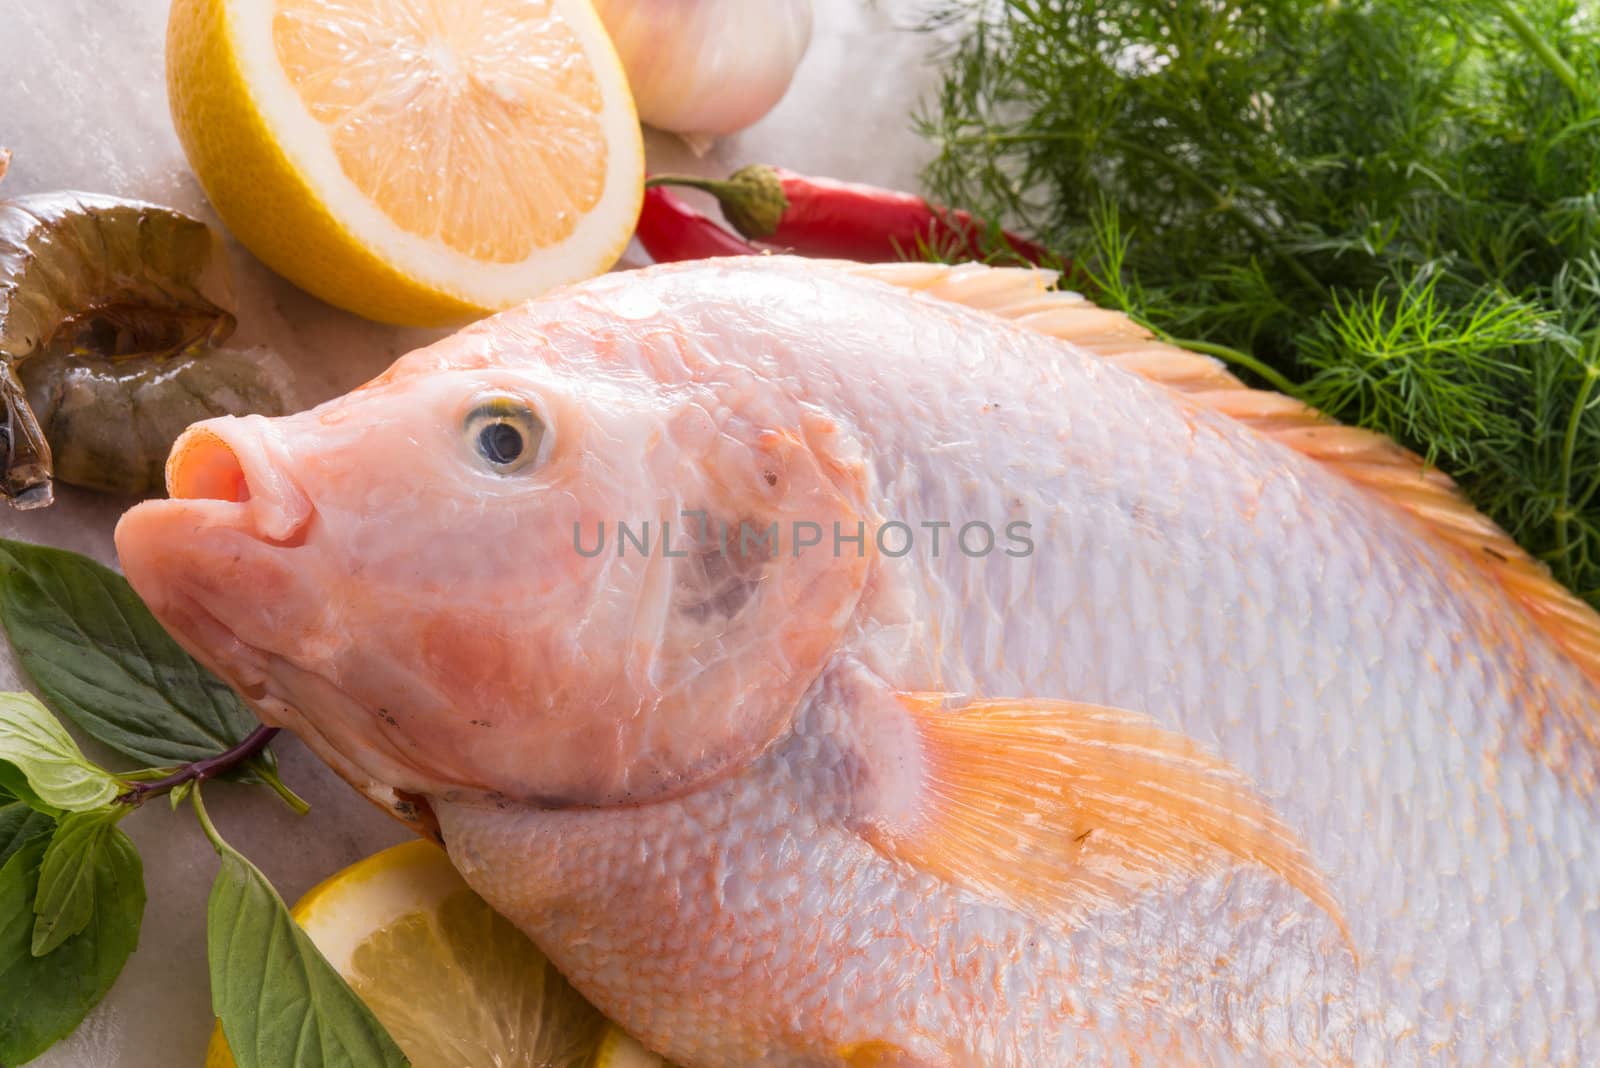 Freshness reddens the Nile Tilapia fish (Oreochromis niloticus) by Darius.Dzinnik